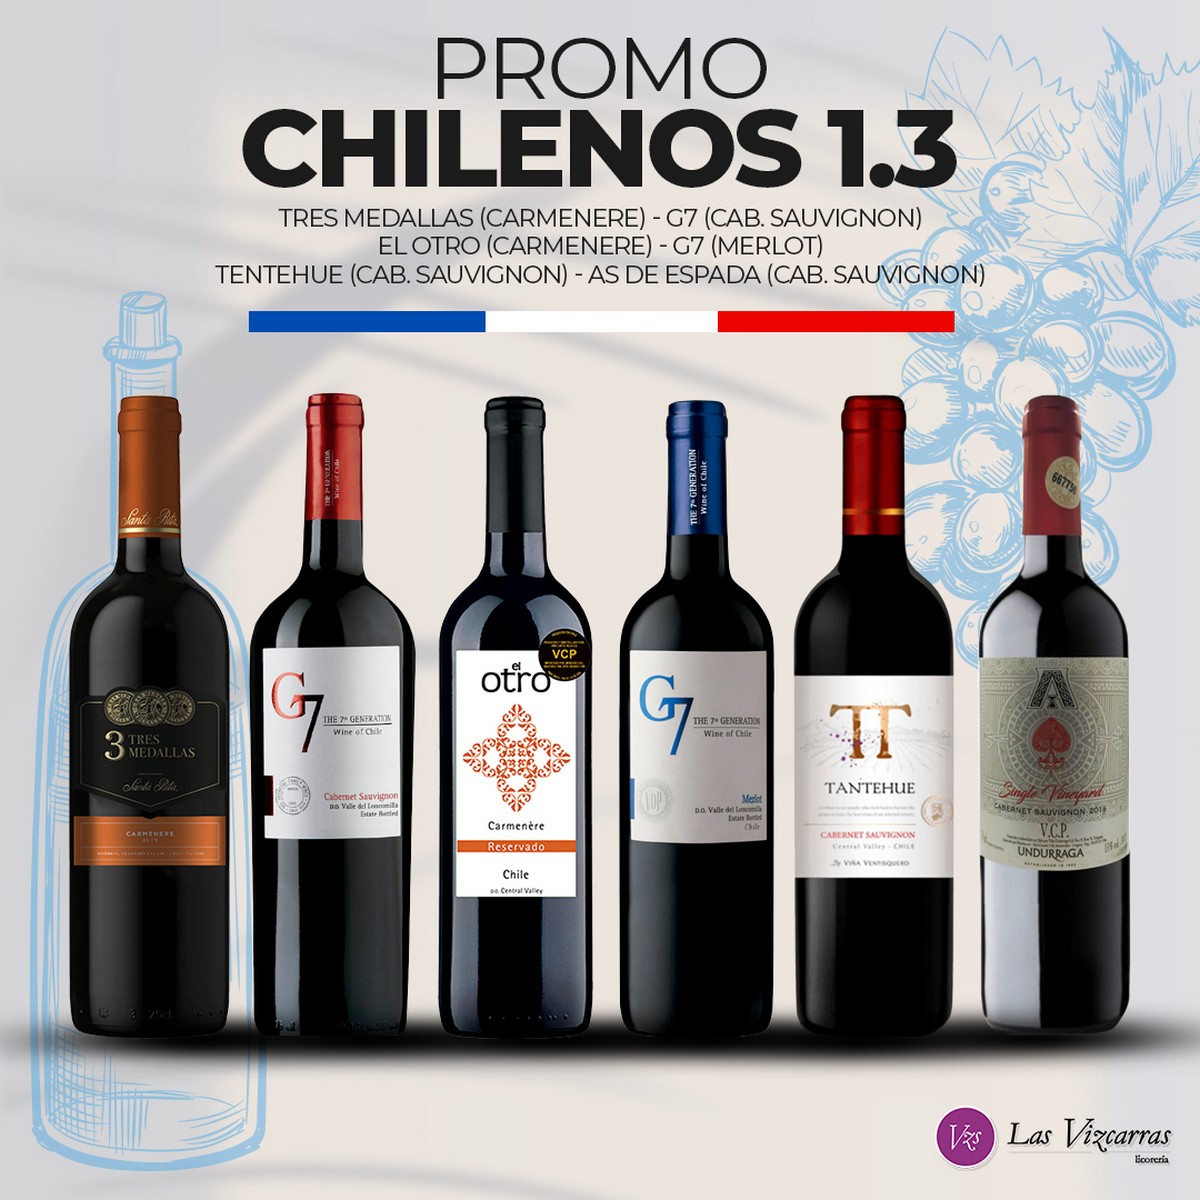 Chilenos-1.3-rrss